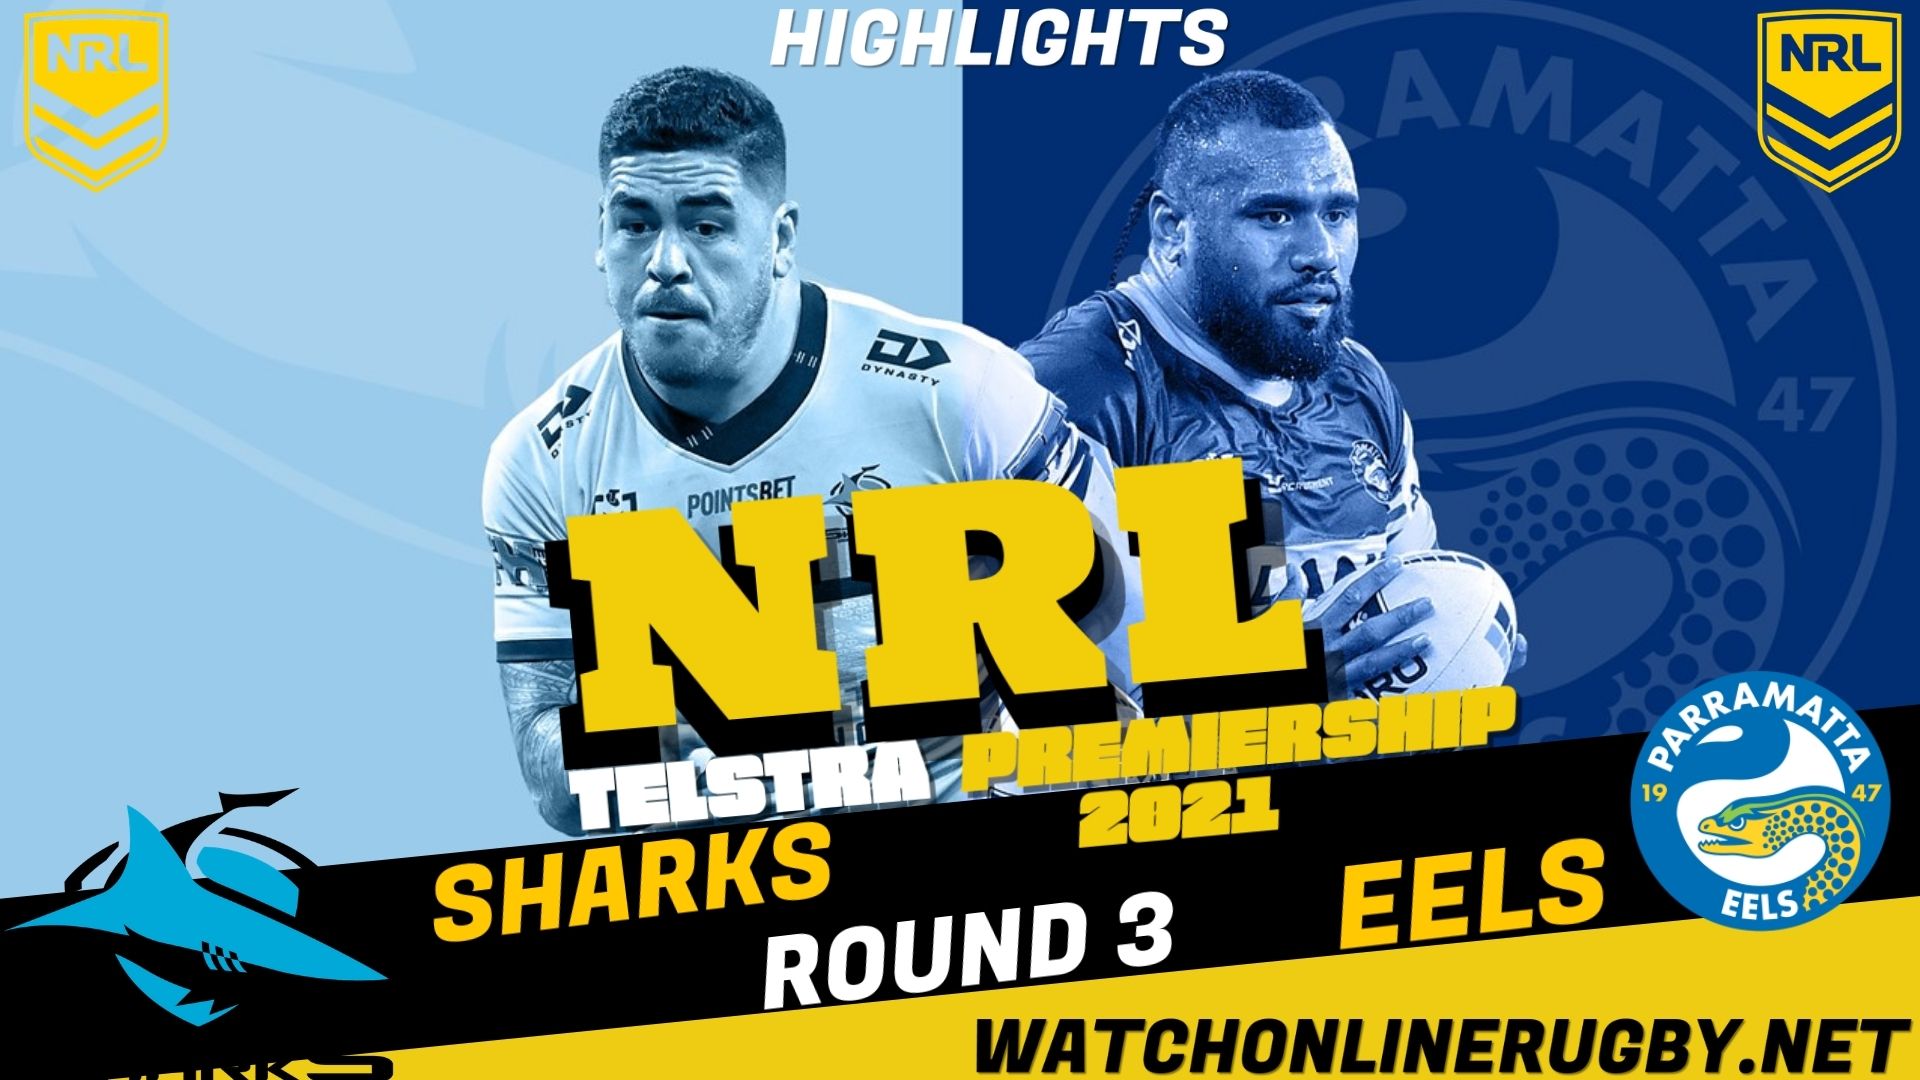 Eels Vs Sharks Highlights RD 3 NRL Rugby